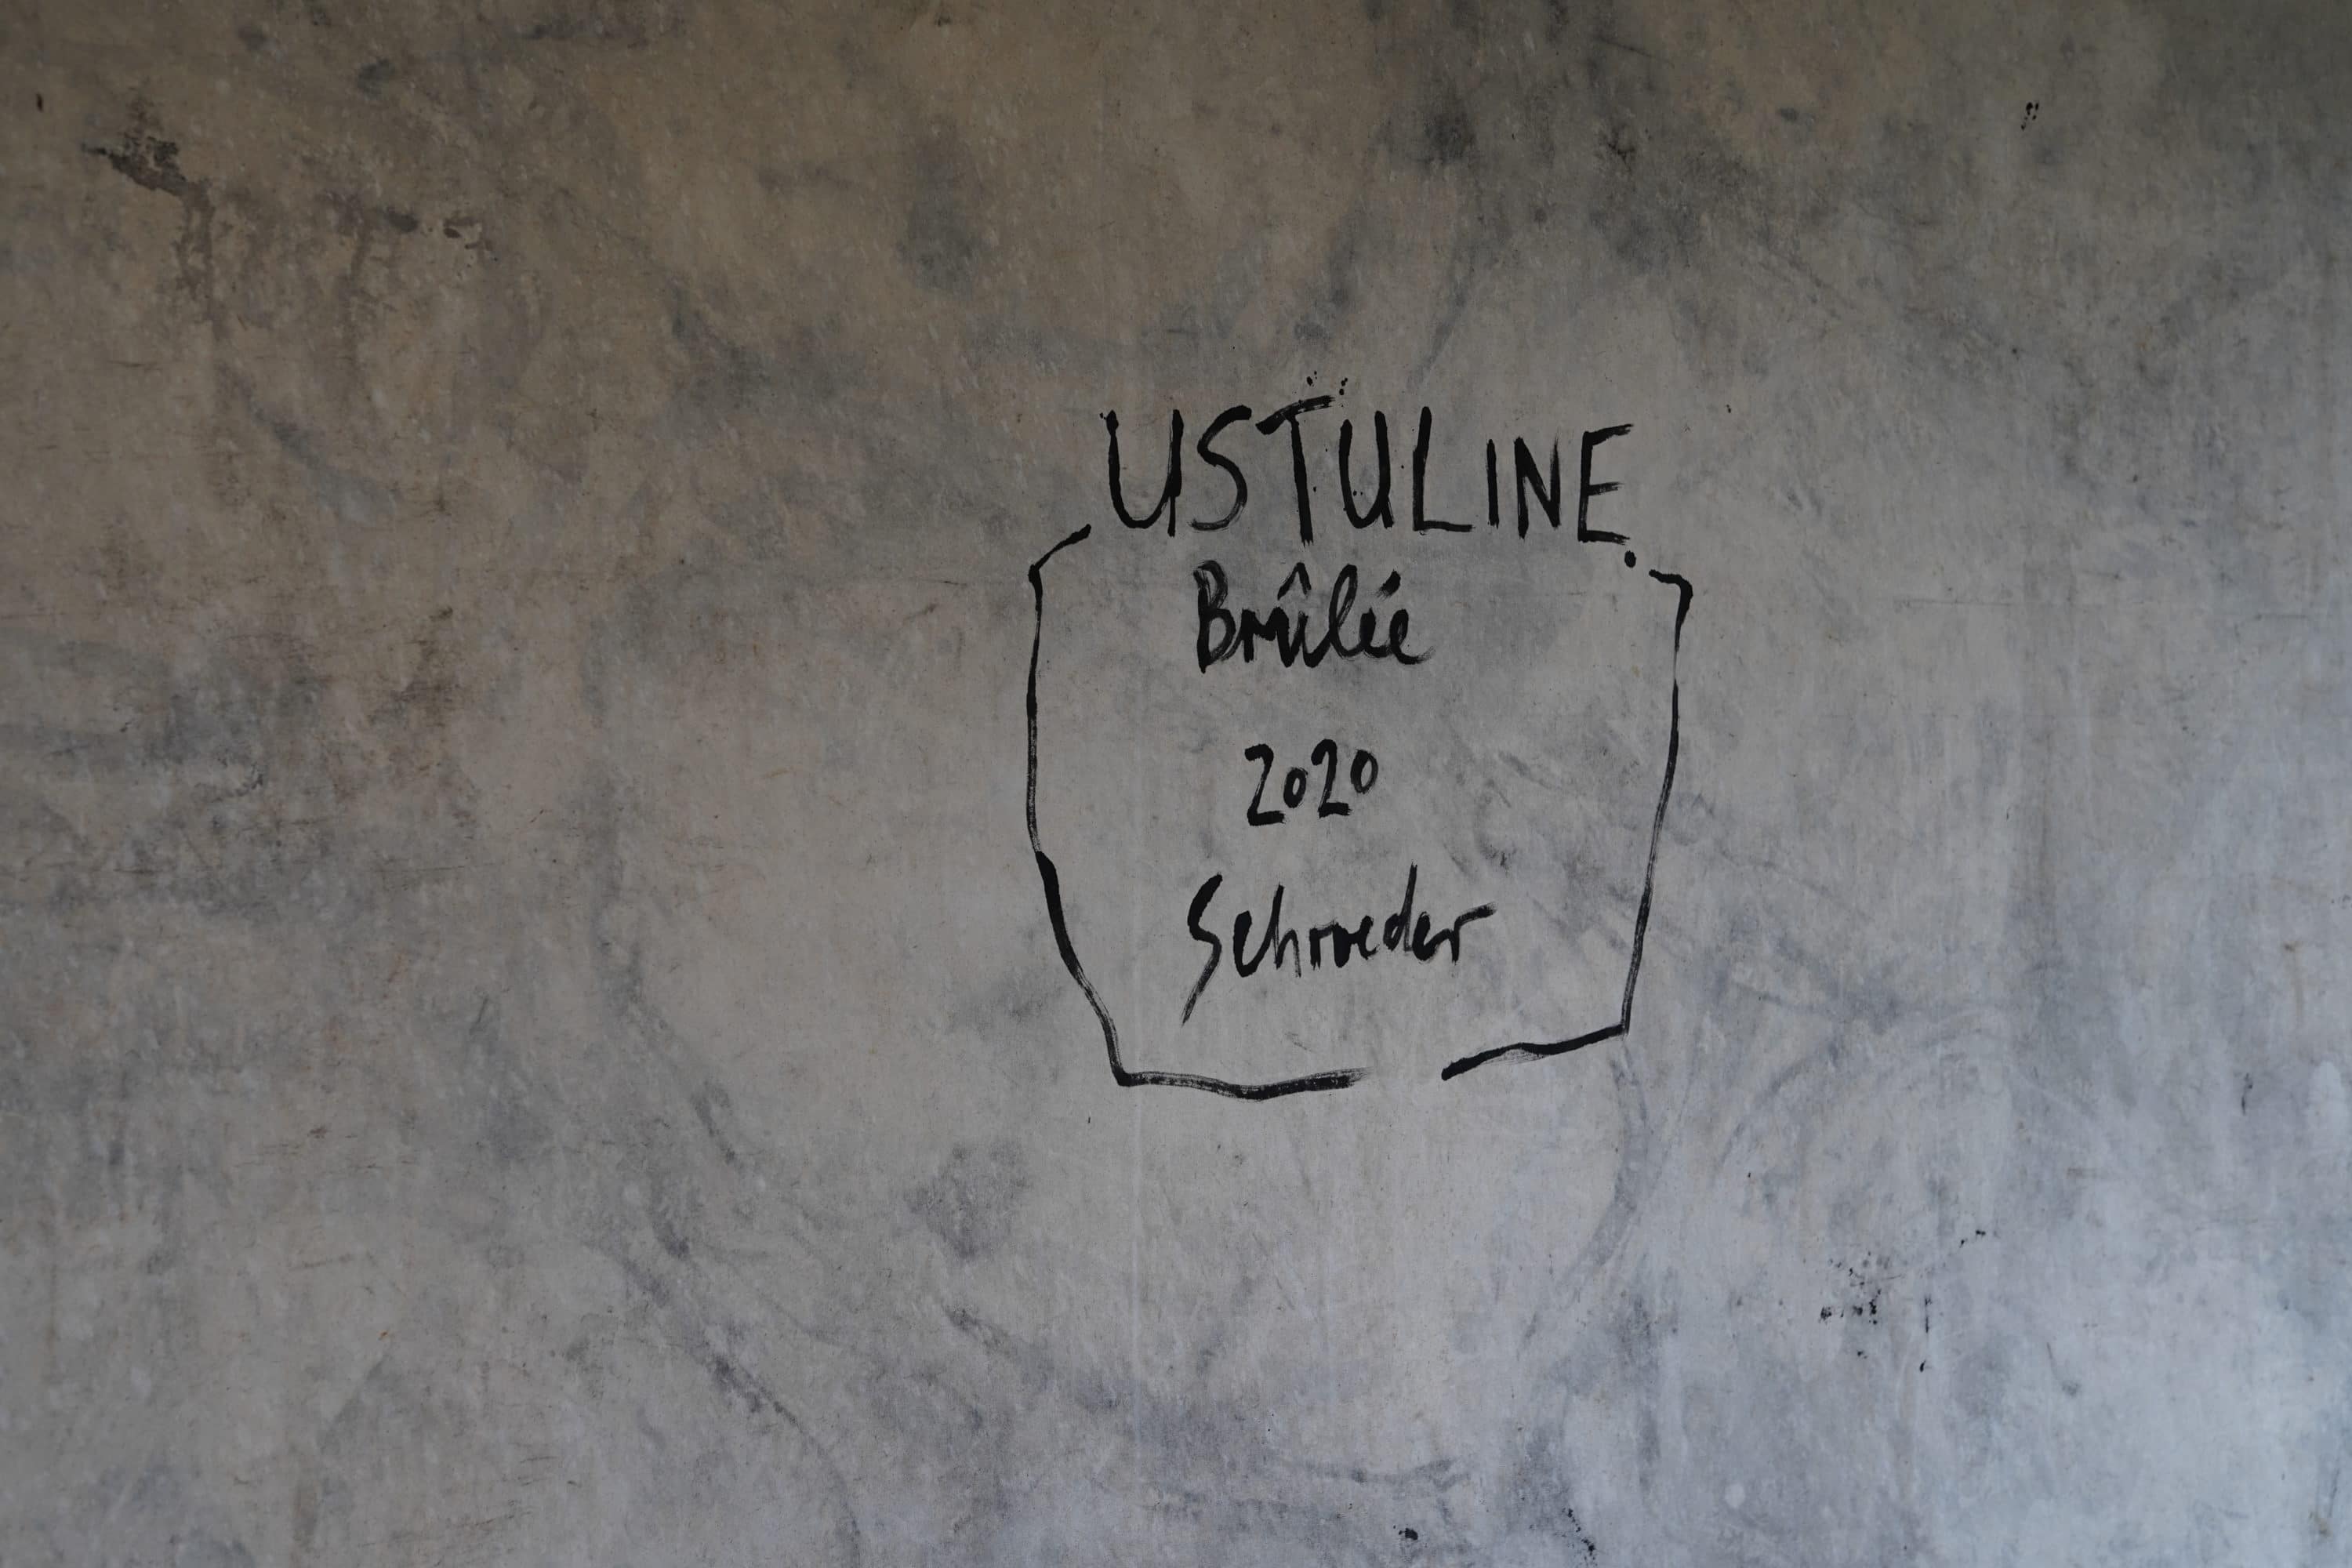 Barbara Schroeder, visite de son atelier, mur écrit "Ustuline brûlée 2020"